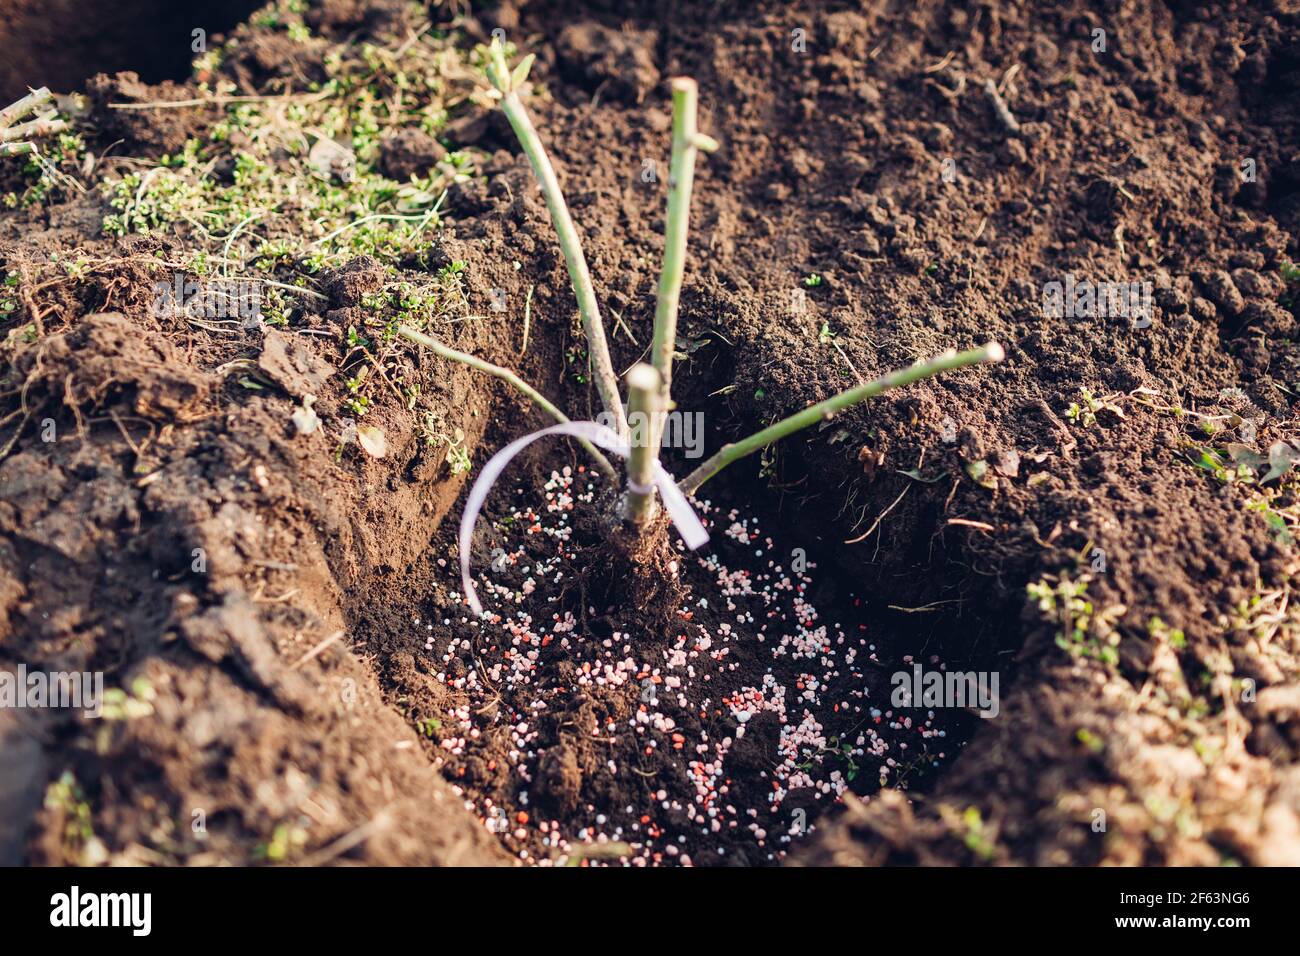 Transplanting rose bush into wet soil adding granulated fertilizer. Spring seasonal garden work. Stock Photo